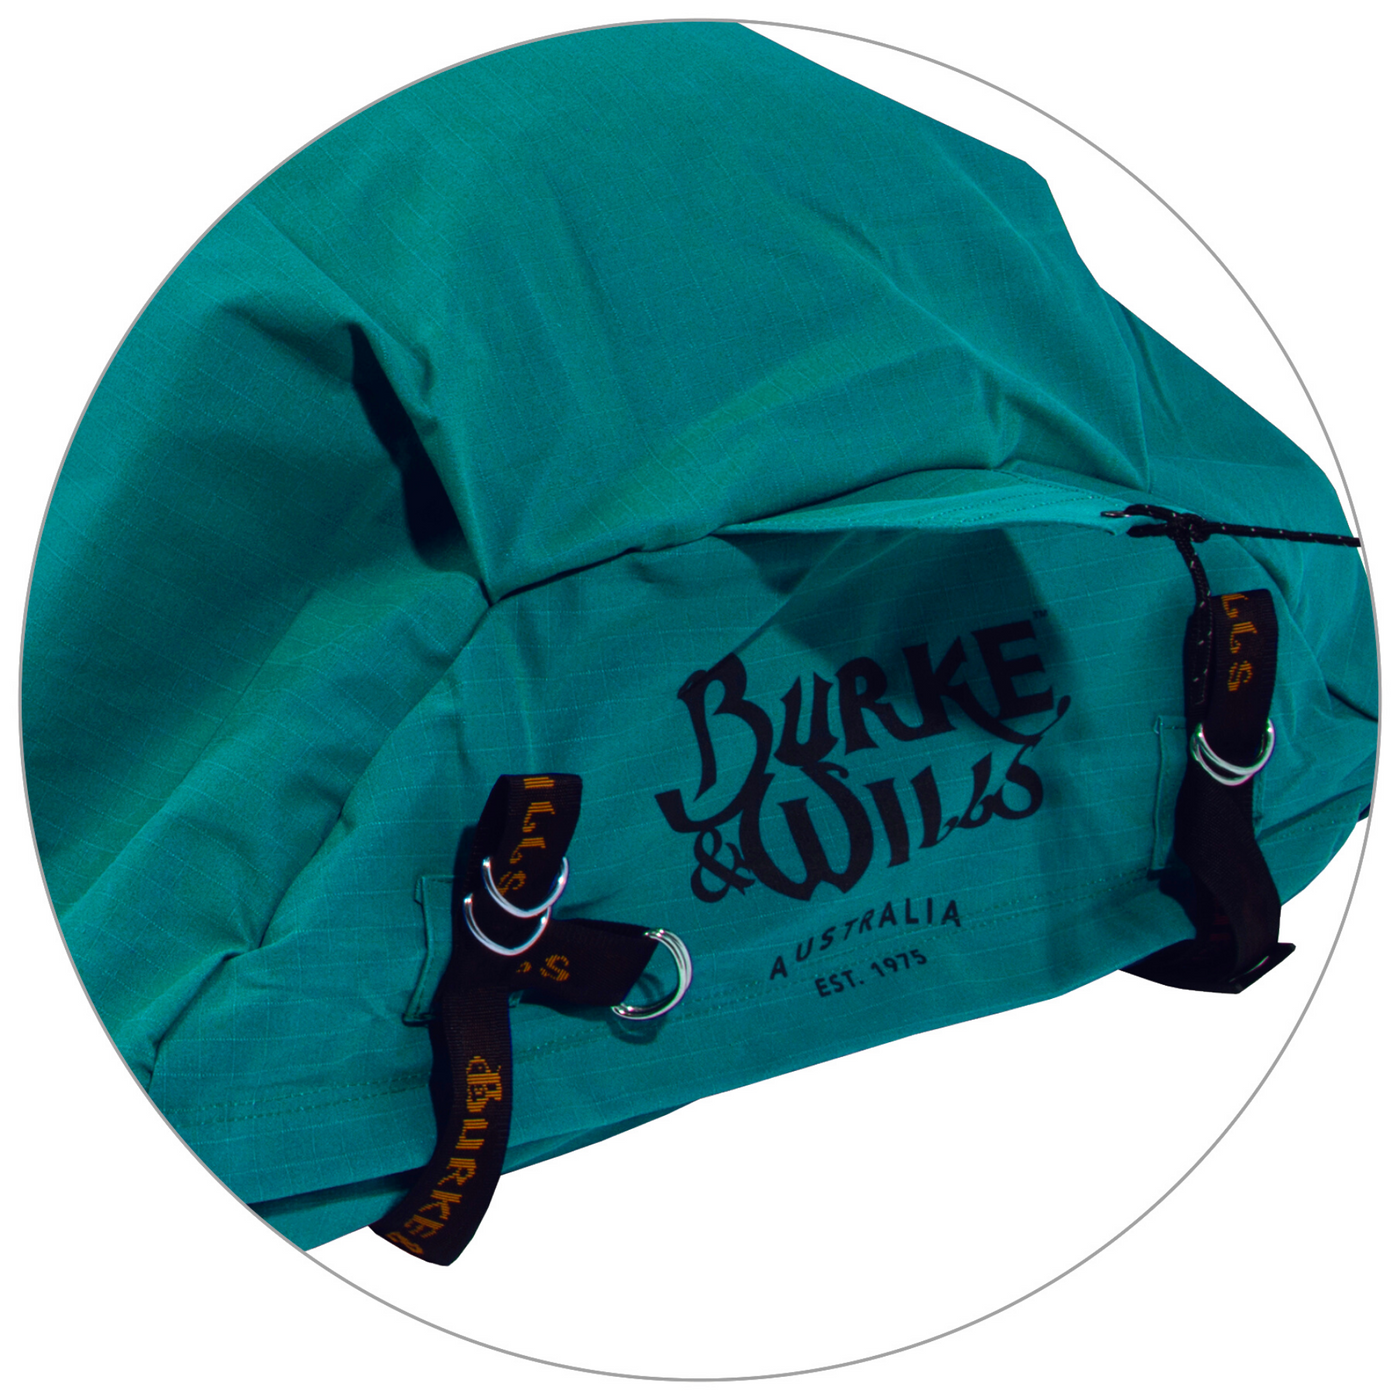 Burke & Wills Ironbark Fly Swag Single Emerald Green - Outback Traders Australia